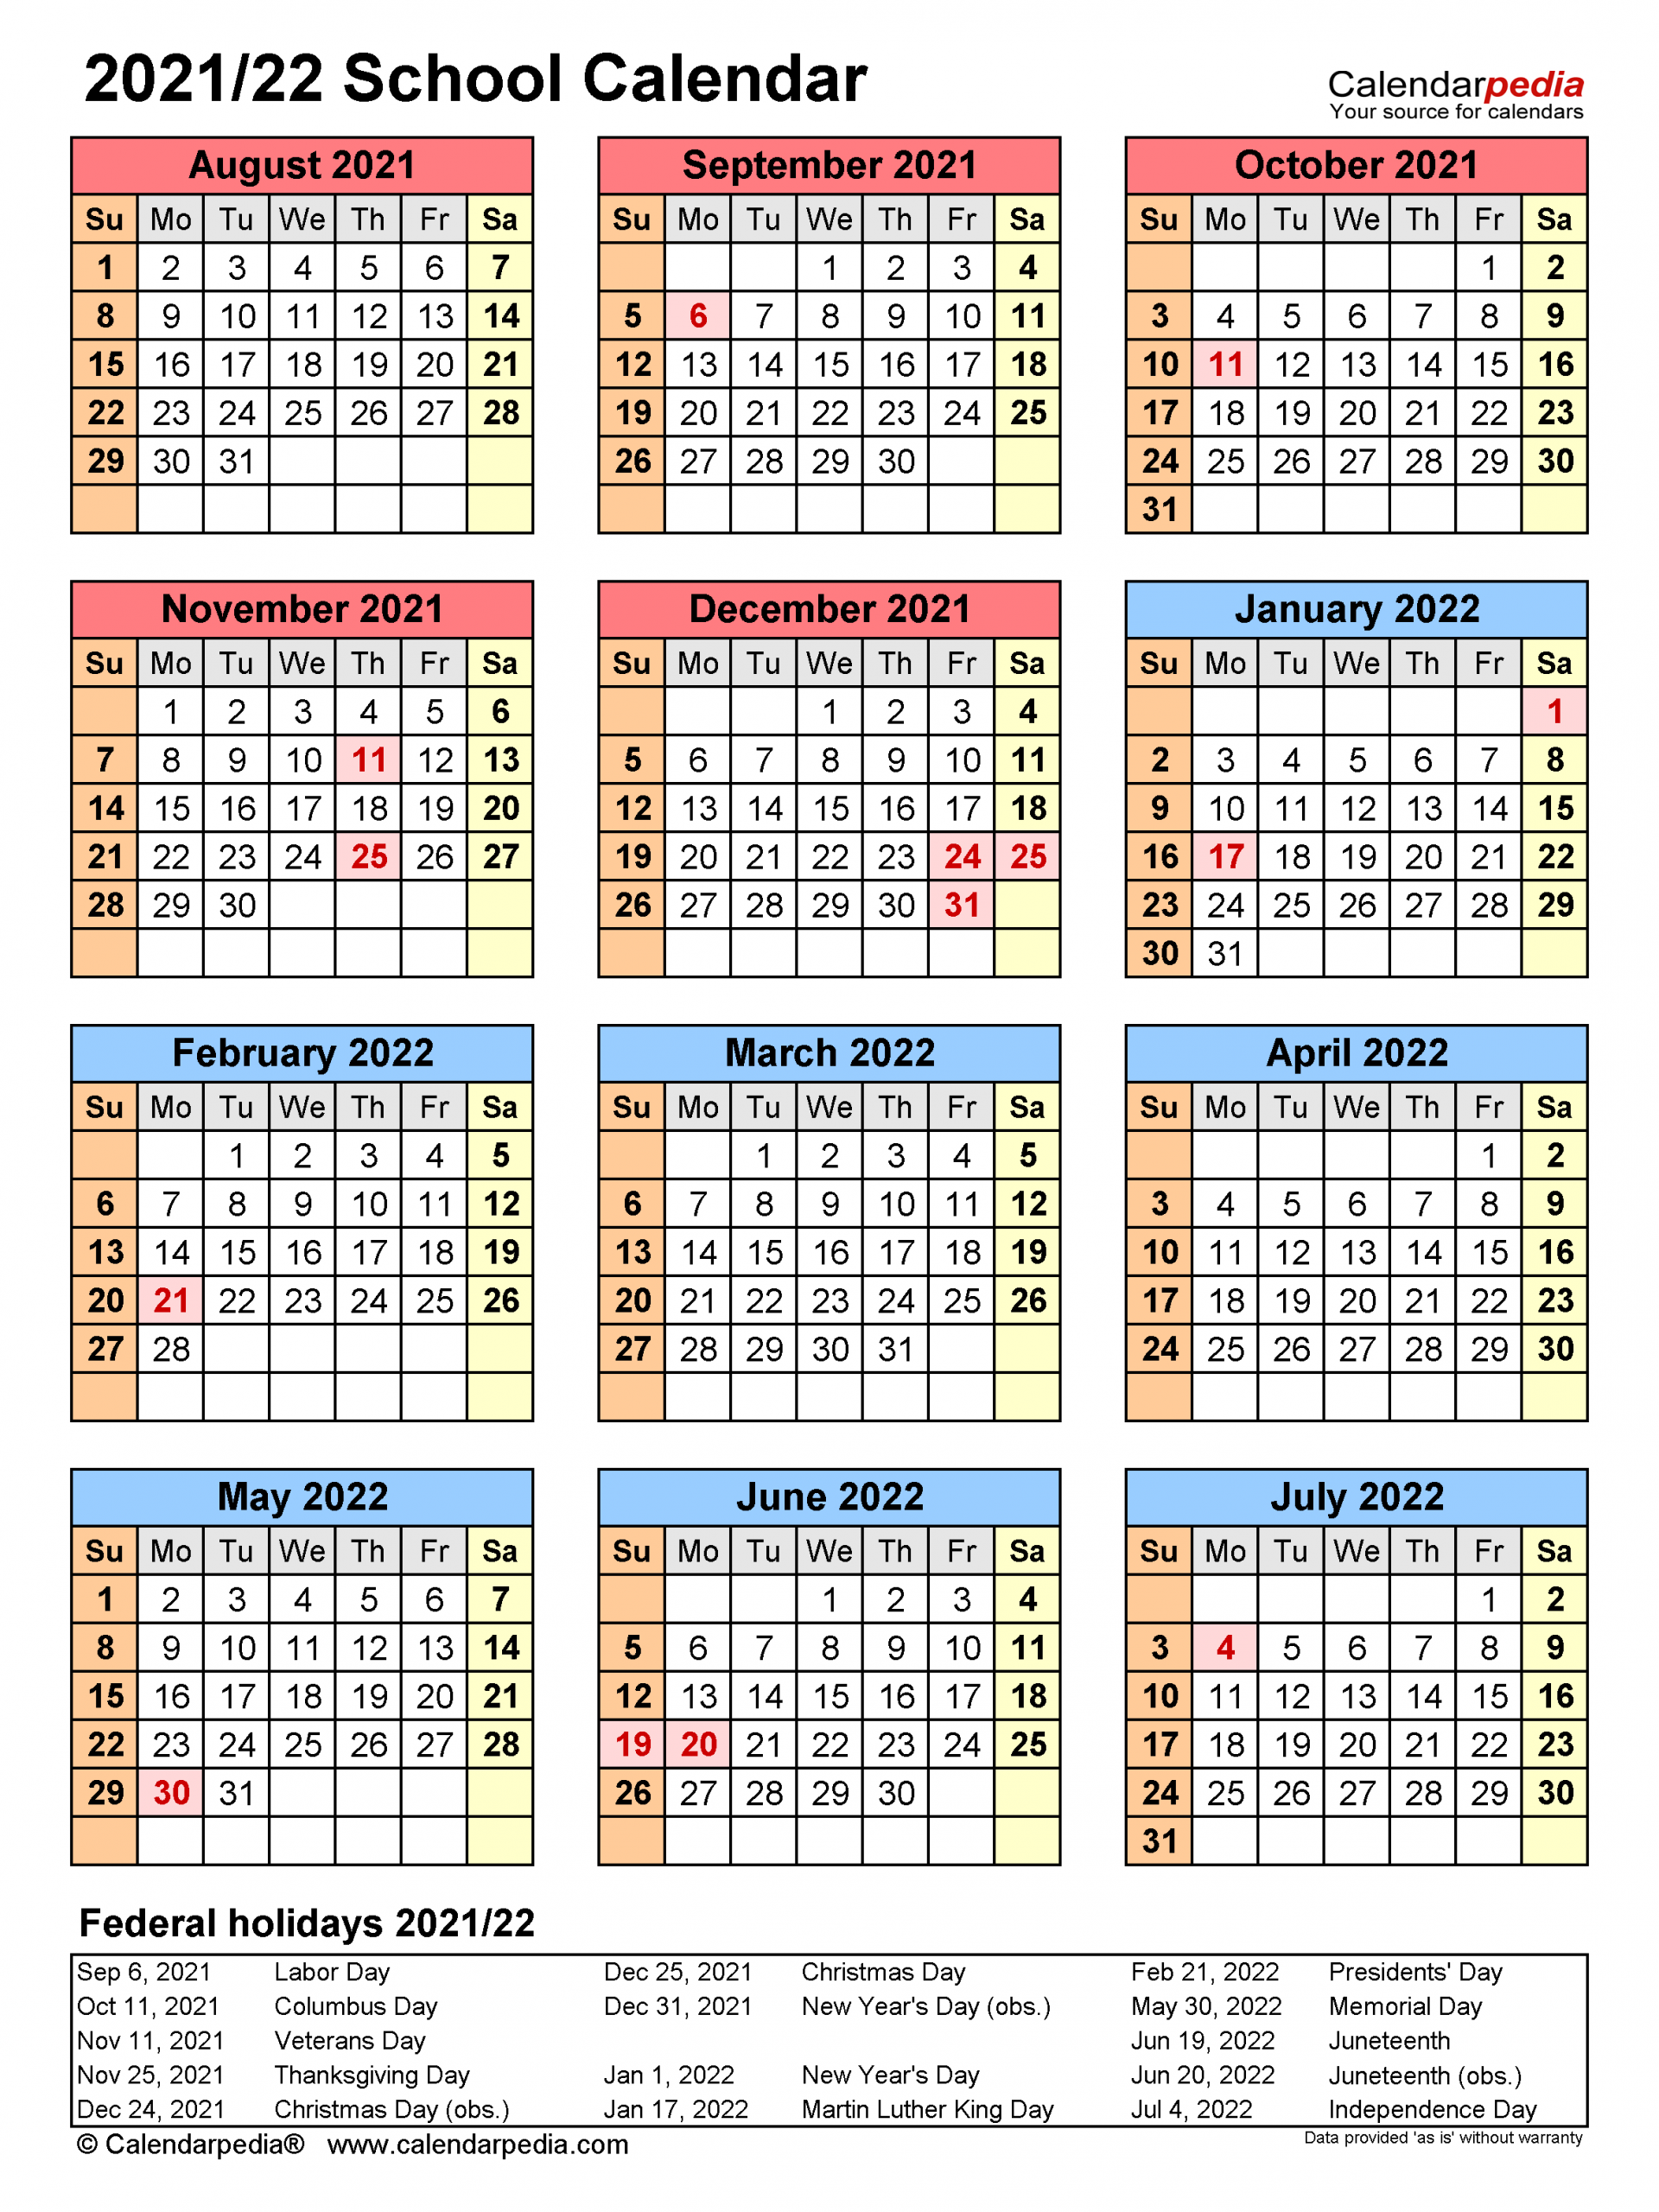 Rpi Academic Calendar 2021 2022 - February 2021